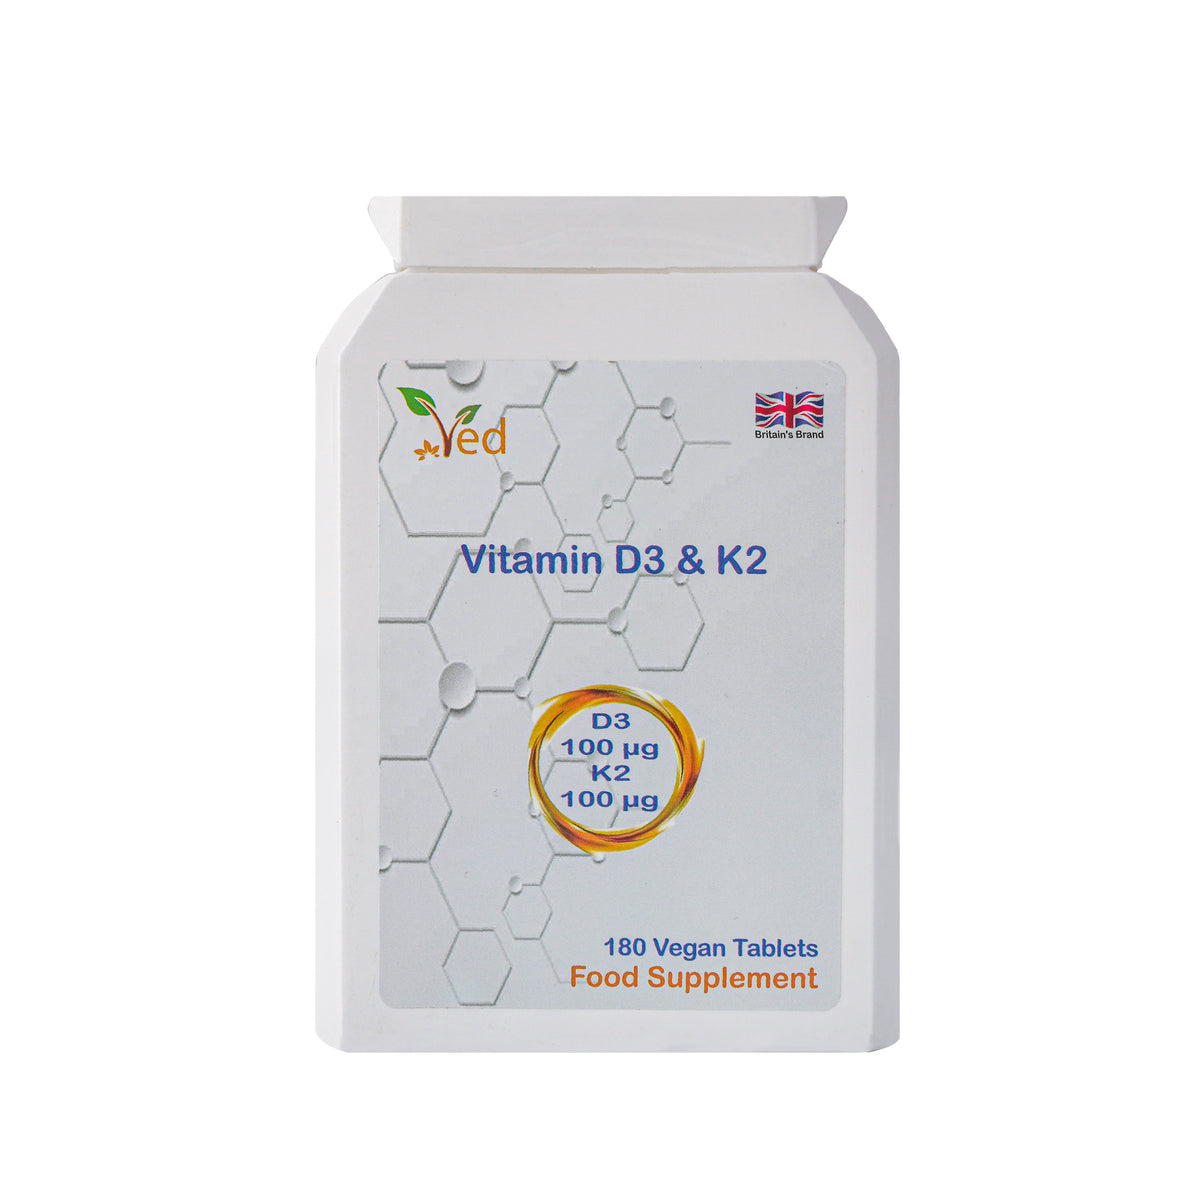 Ved's Vitamin D3 K2| 1000 IU Vitamin D3 & 100 mcg Vitamin K2| Max Strength 2 in 1 Immune Support | Vegan, Gluten| 180 Vegan Tablets|6 Month Supply